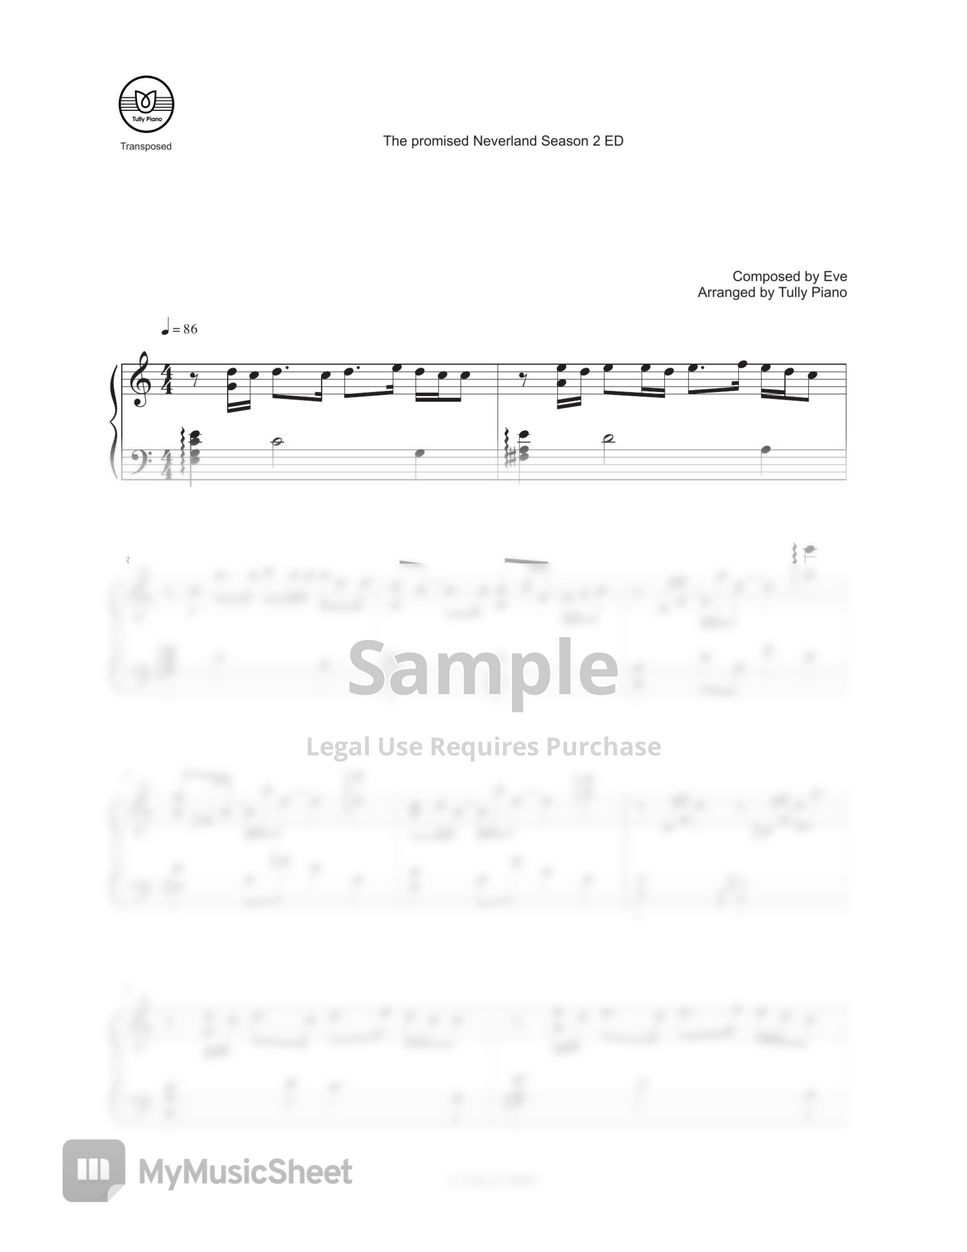 The promised Neverland 2 ED - Mahou(마법 魔法) (Easy Key:C Maj.) by Tully Piano